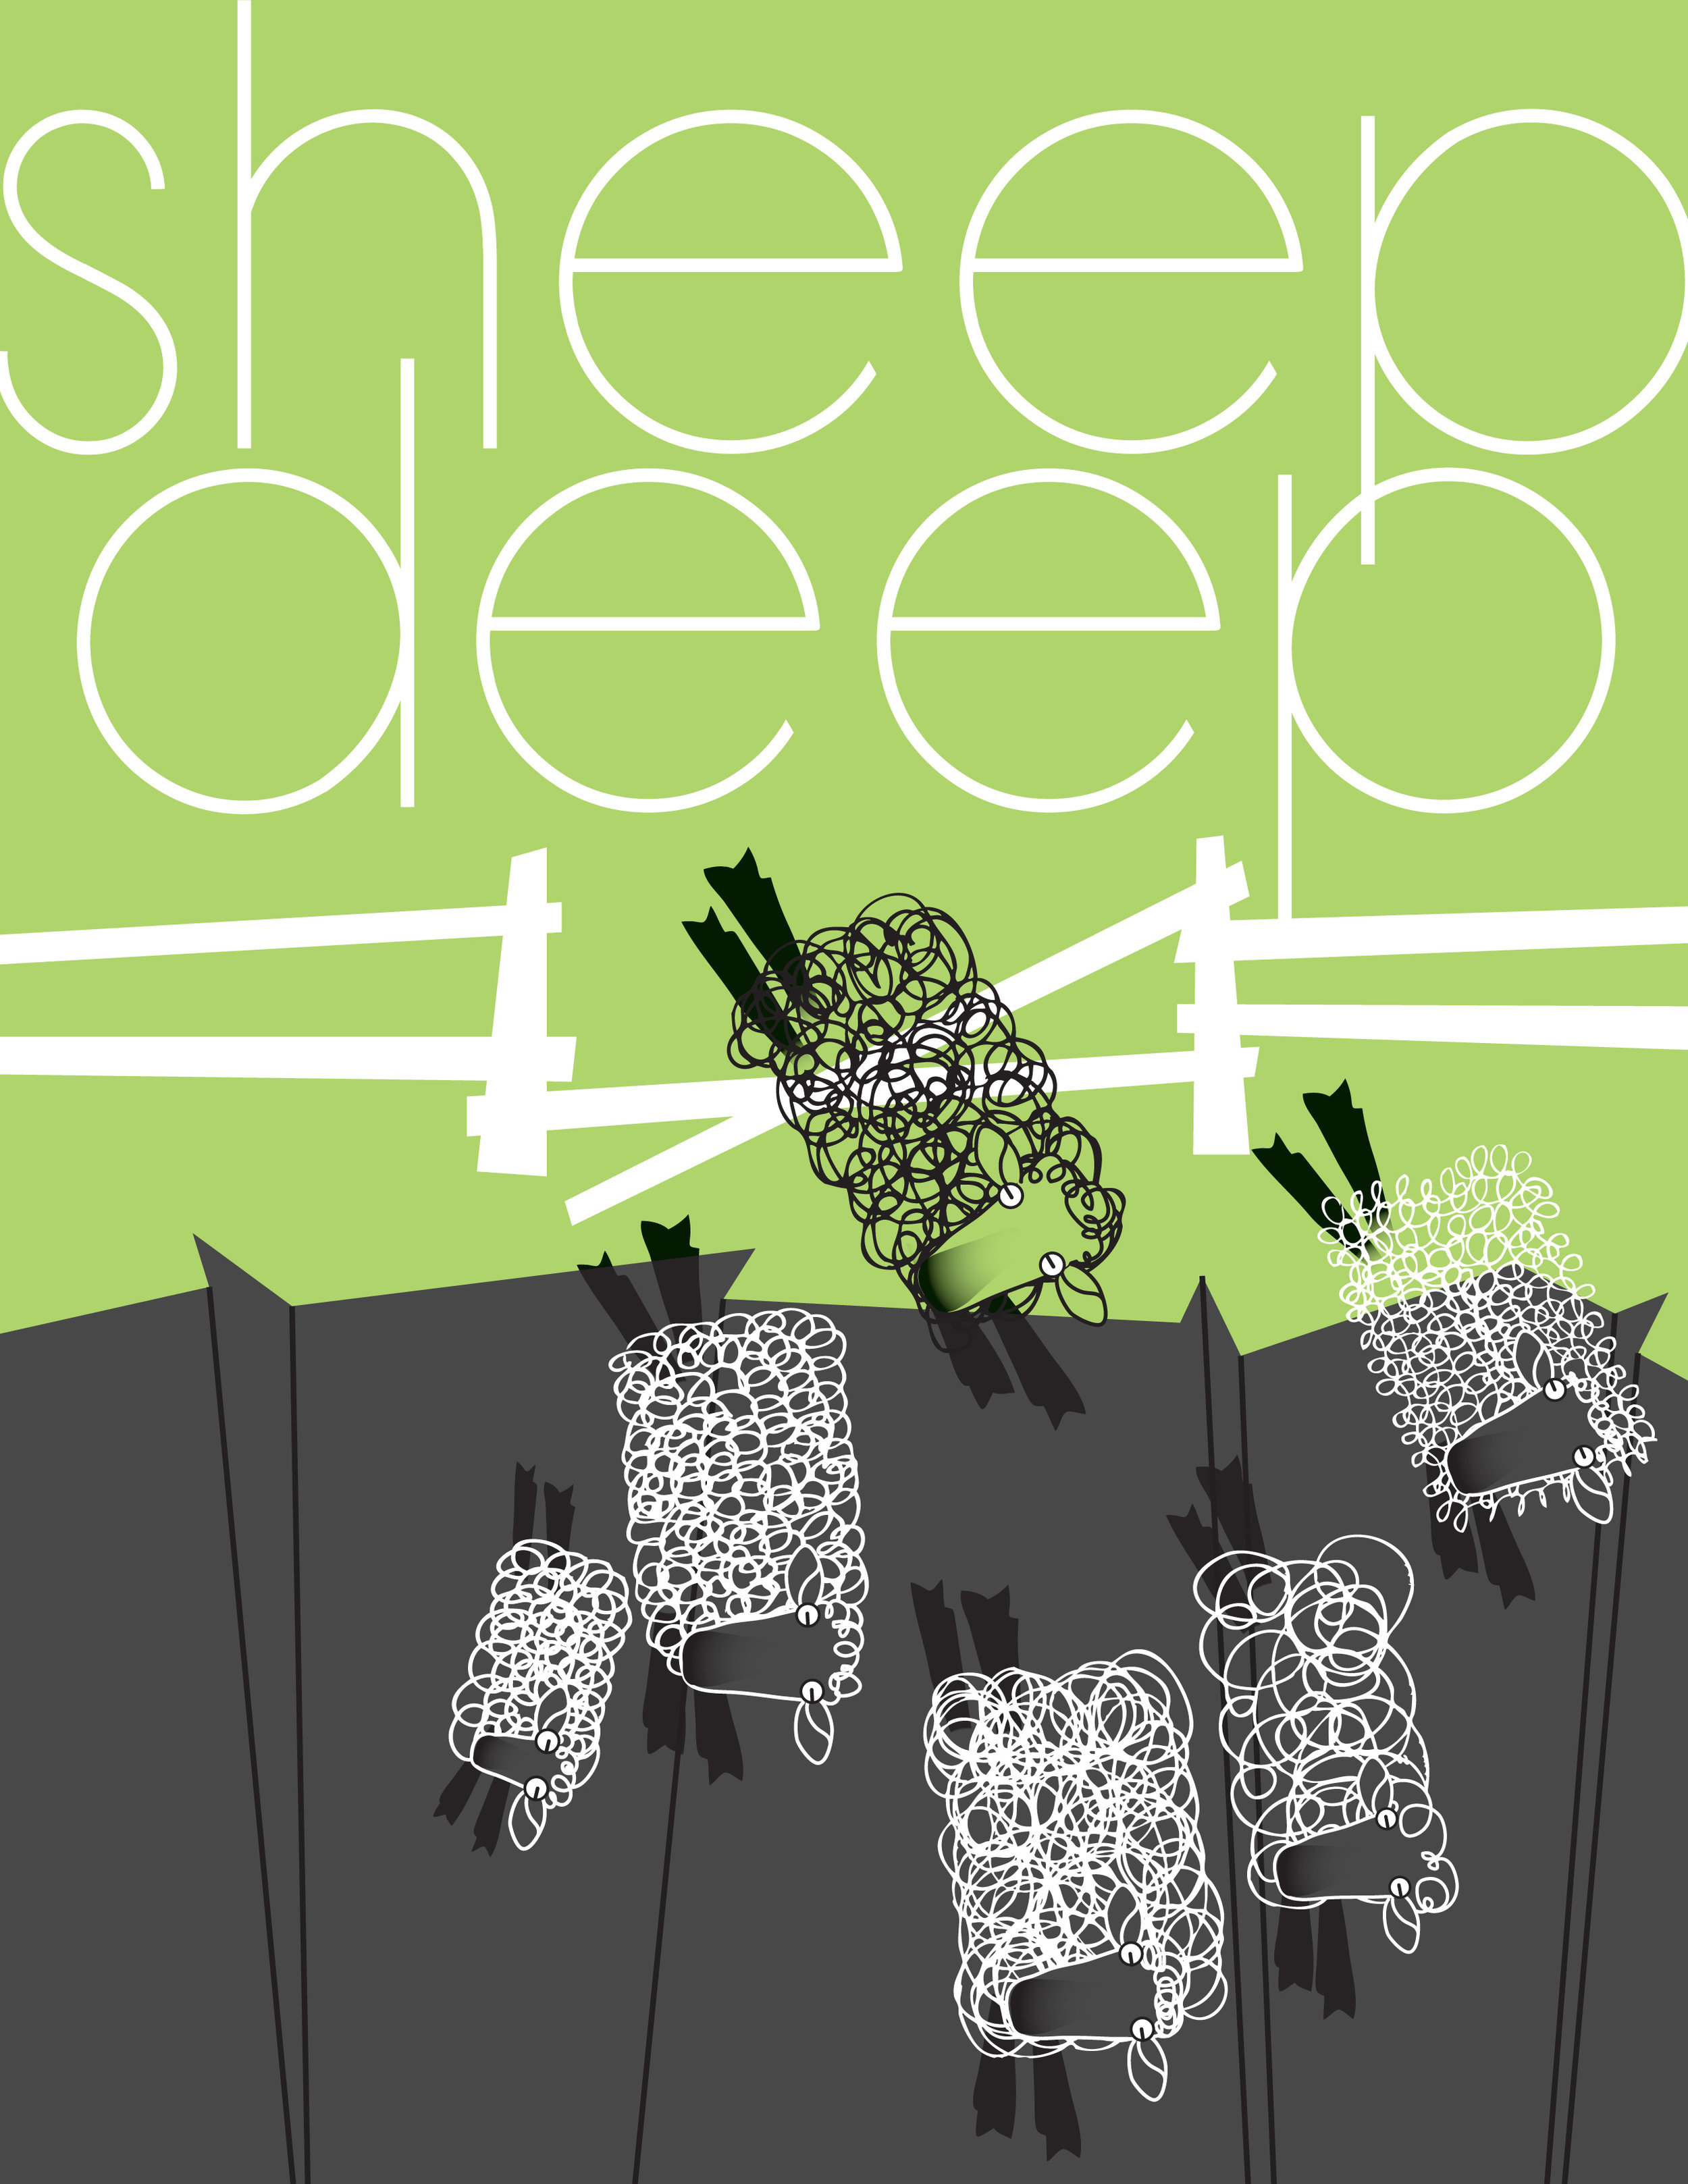 Sheep Sleep Book 2-6.jpg